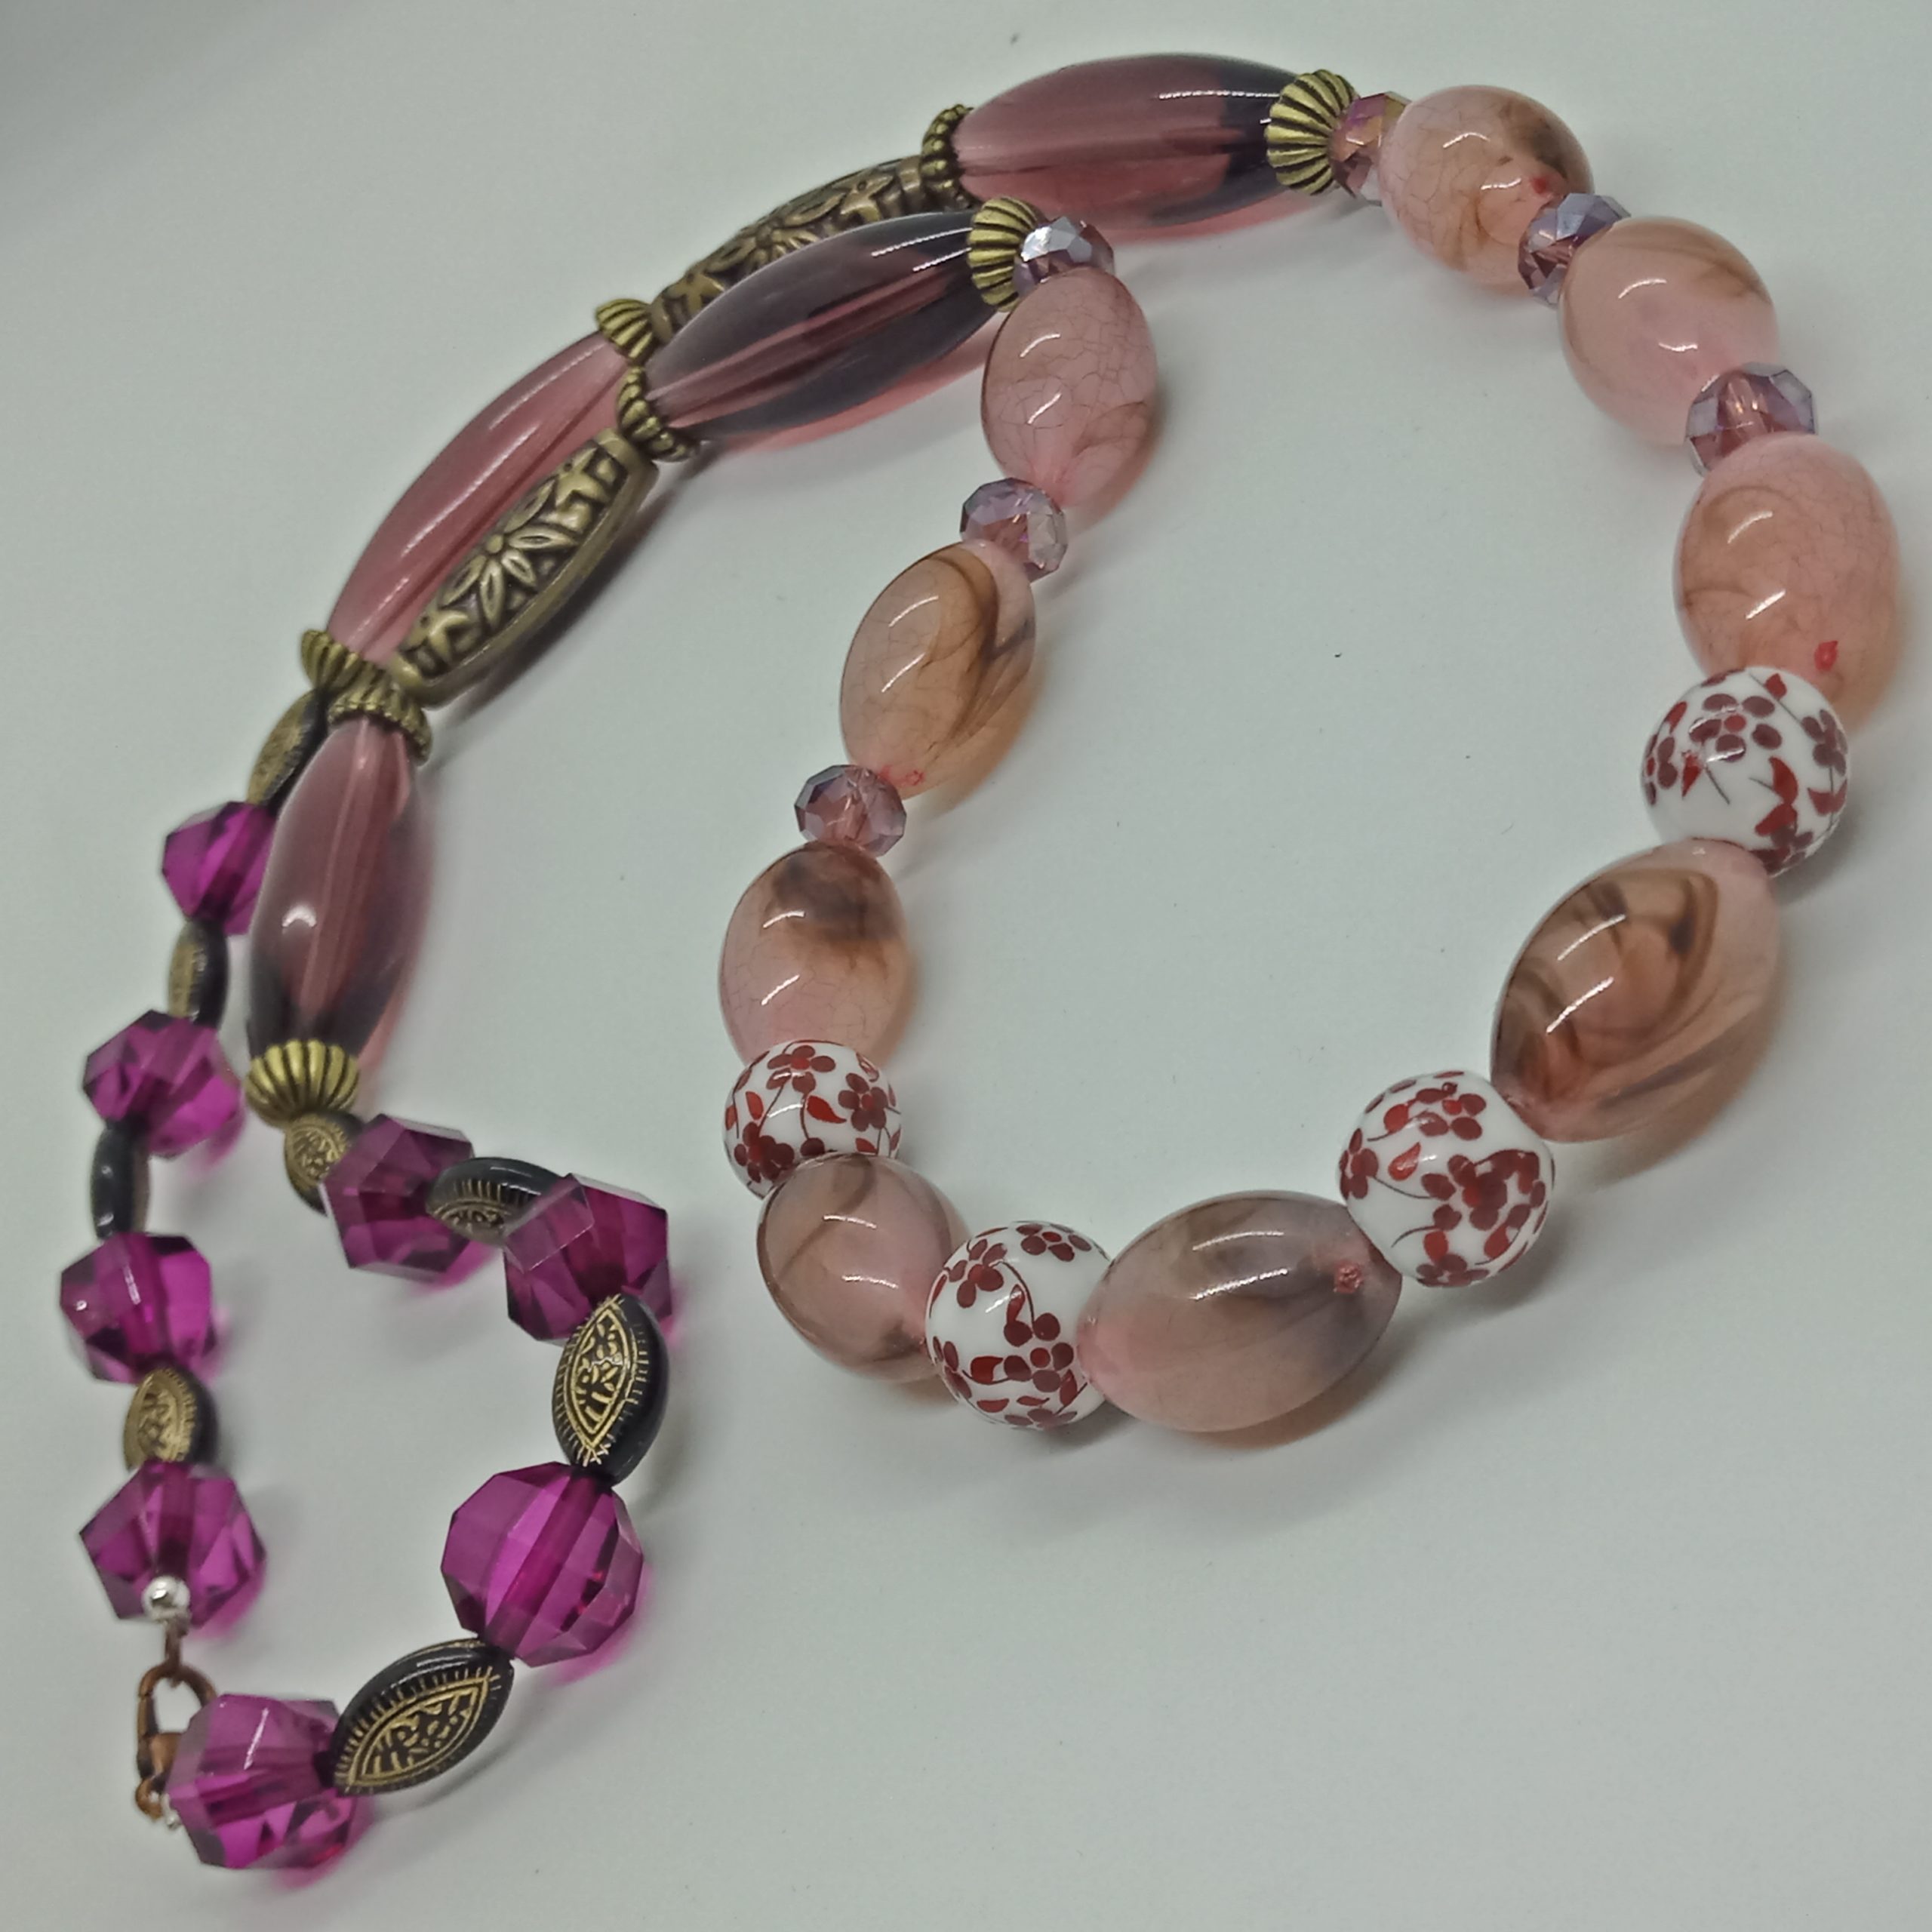 Ceramic Beads Necklace